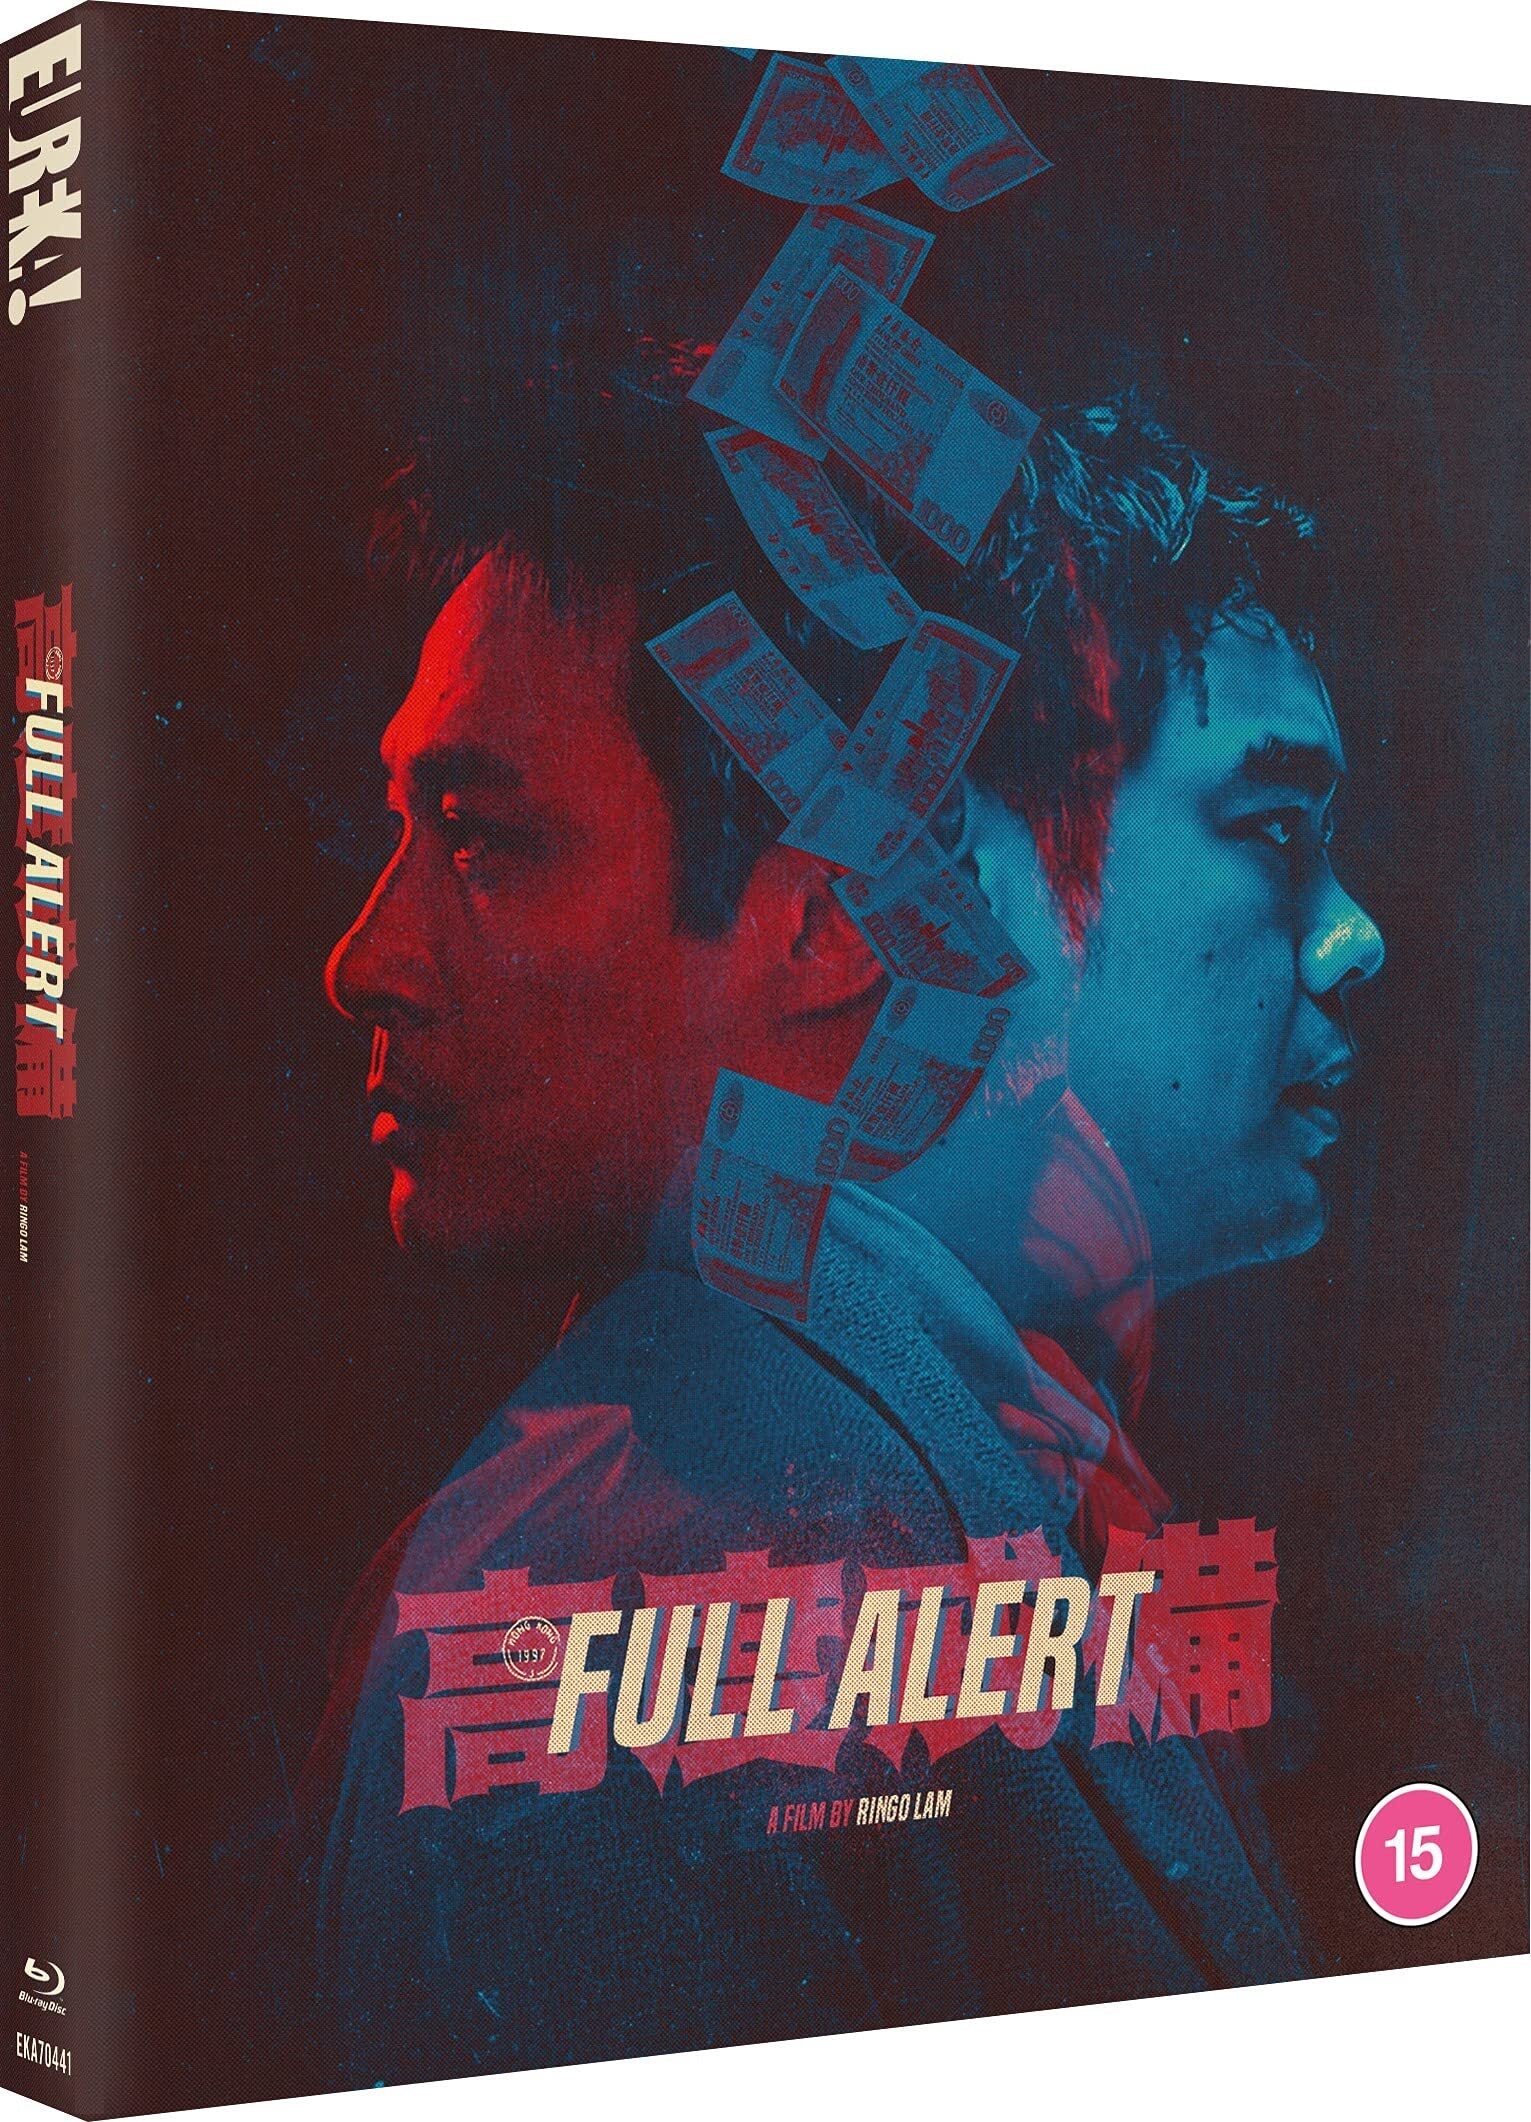 Full Alert (Limited Edition - Region B Import) Blu-Ray Blu-Ray